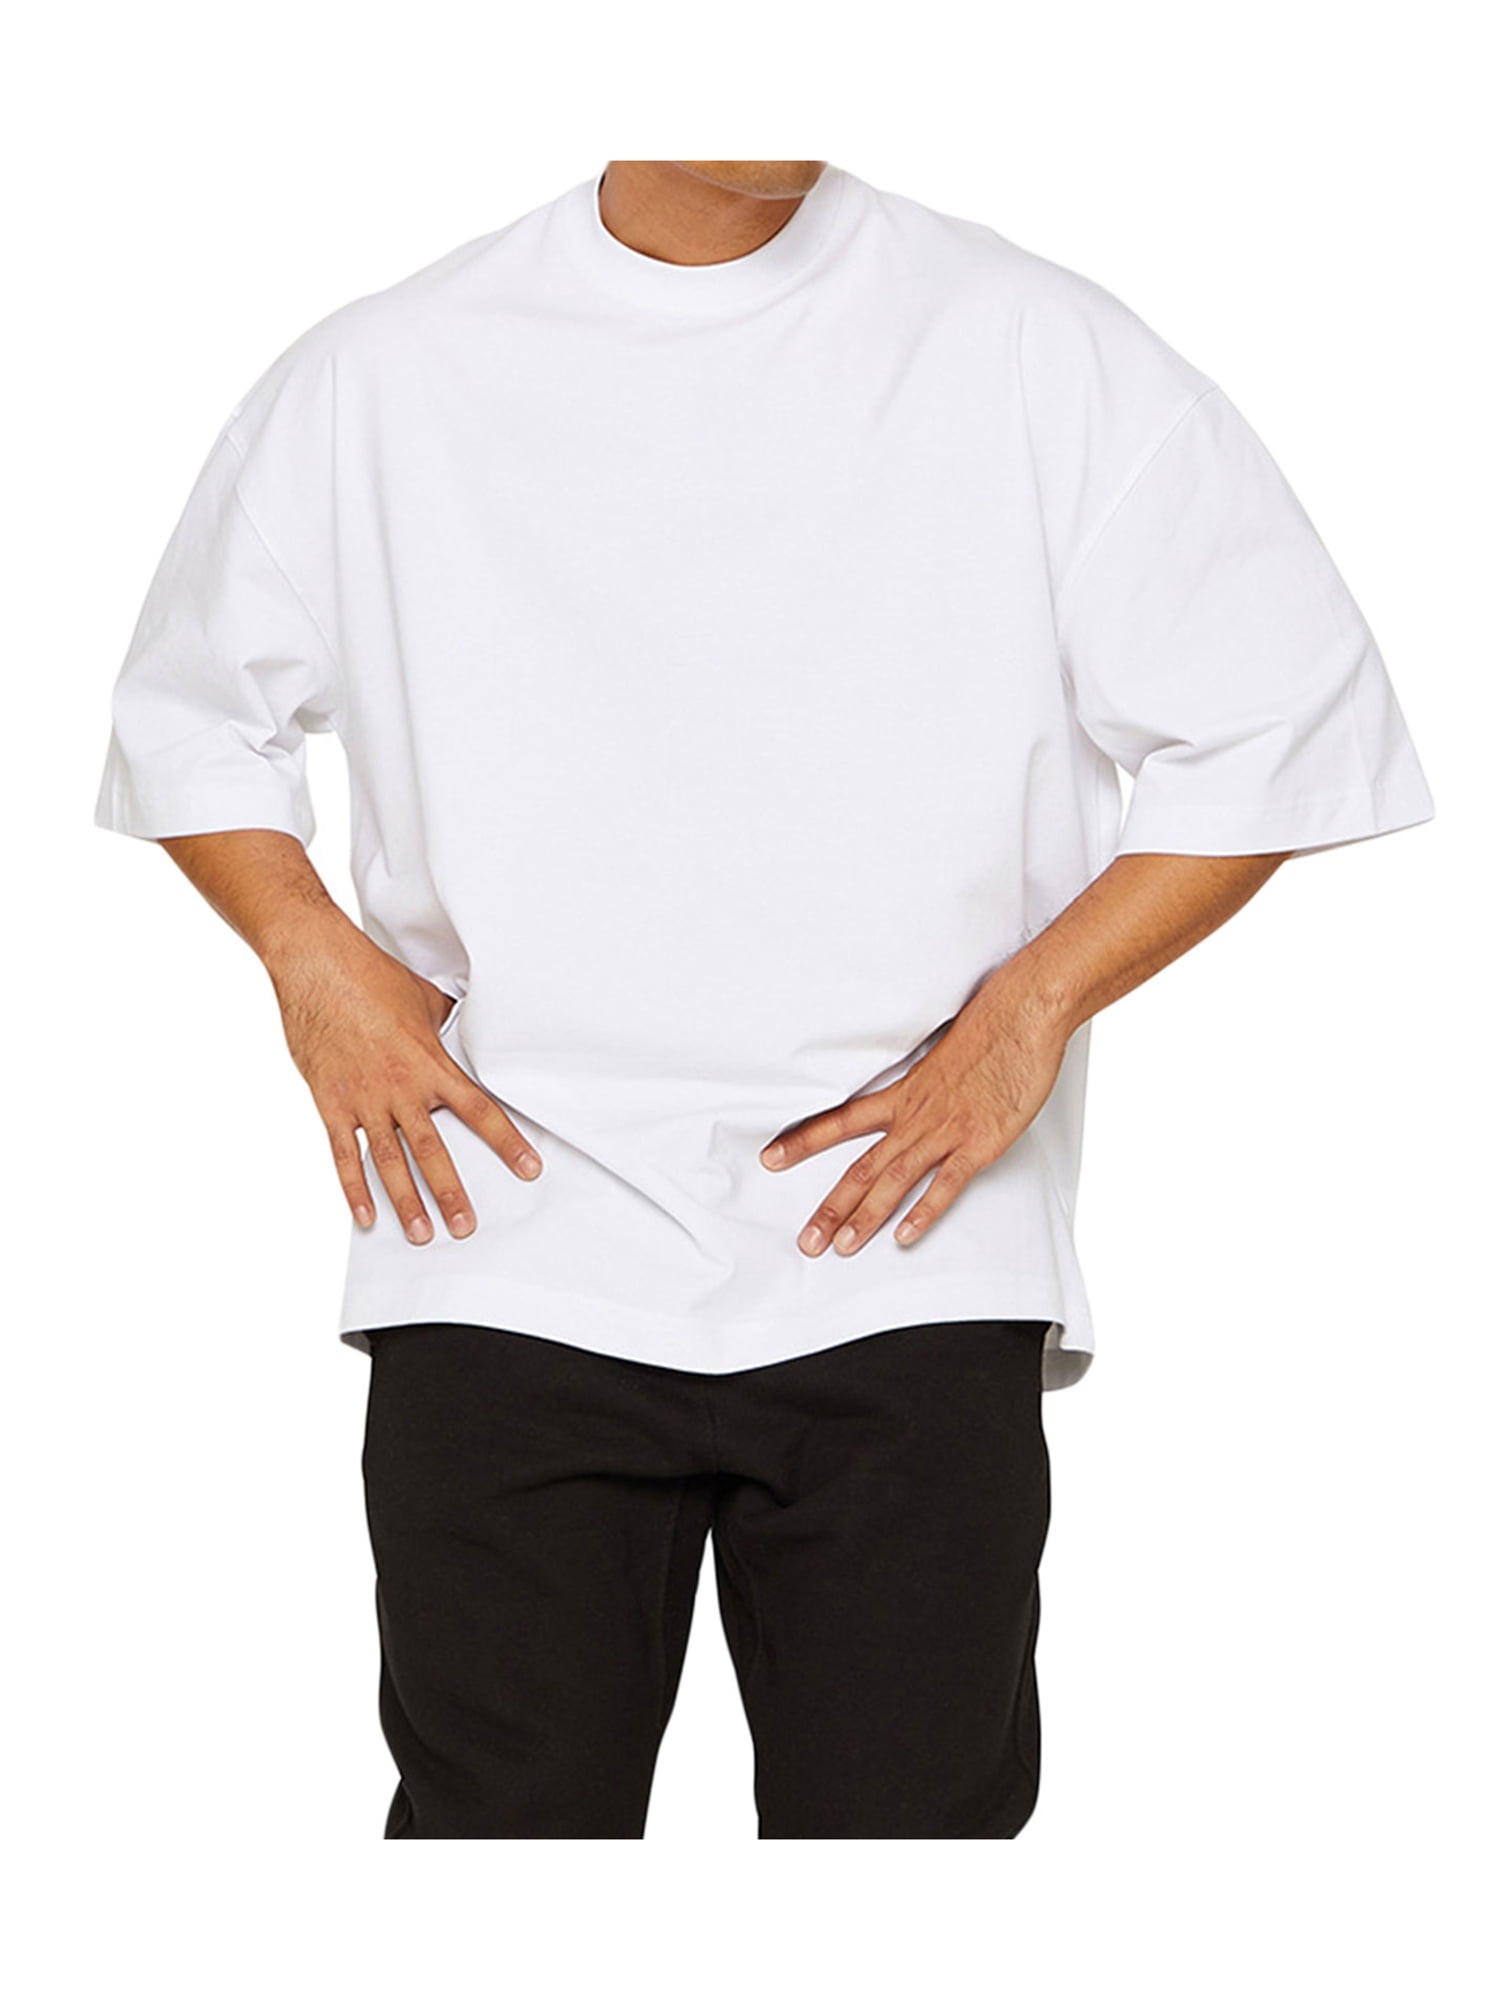 JXXIATANG Workout Shirts Short Sleeve Oversized Hipster Loose Gym Shirts Basketball Hip-hop Street Style T-shirts for Men, Men's, Size: 3XL, Black